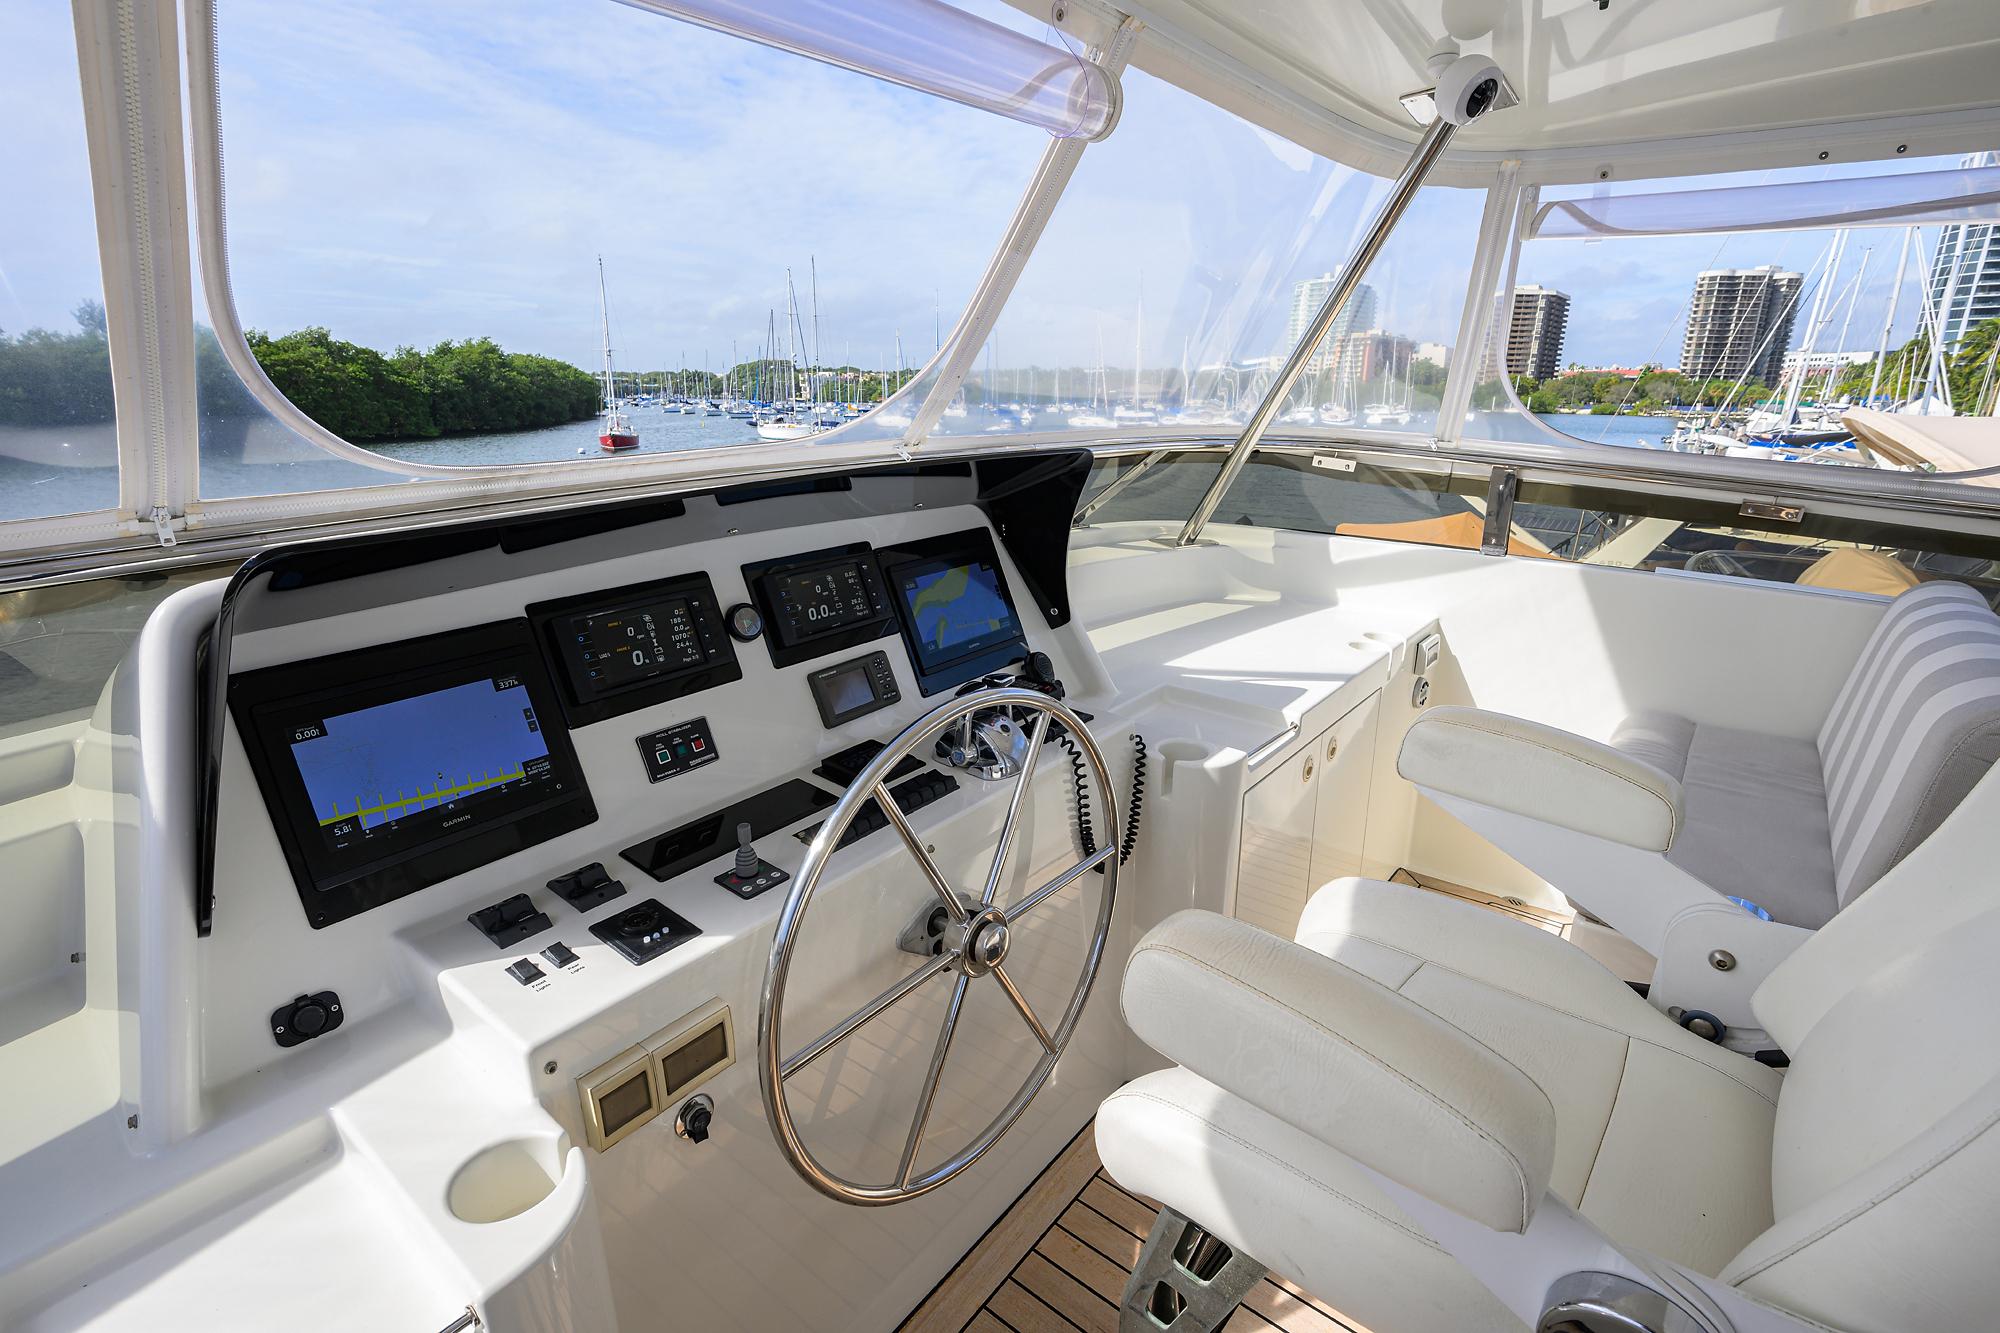 St. Tropez Yacht for Sale, 68 Cheoy Lee Yachts Miami, FL